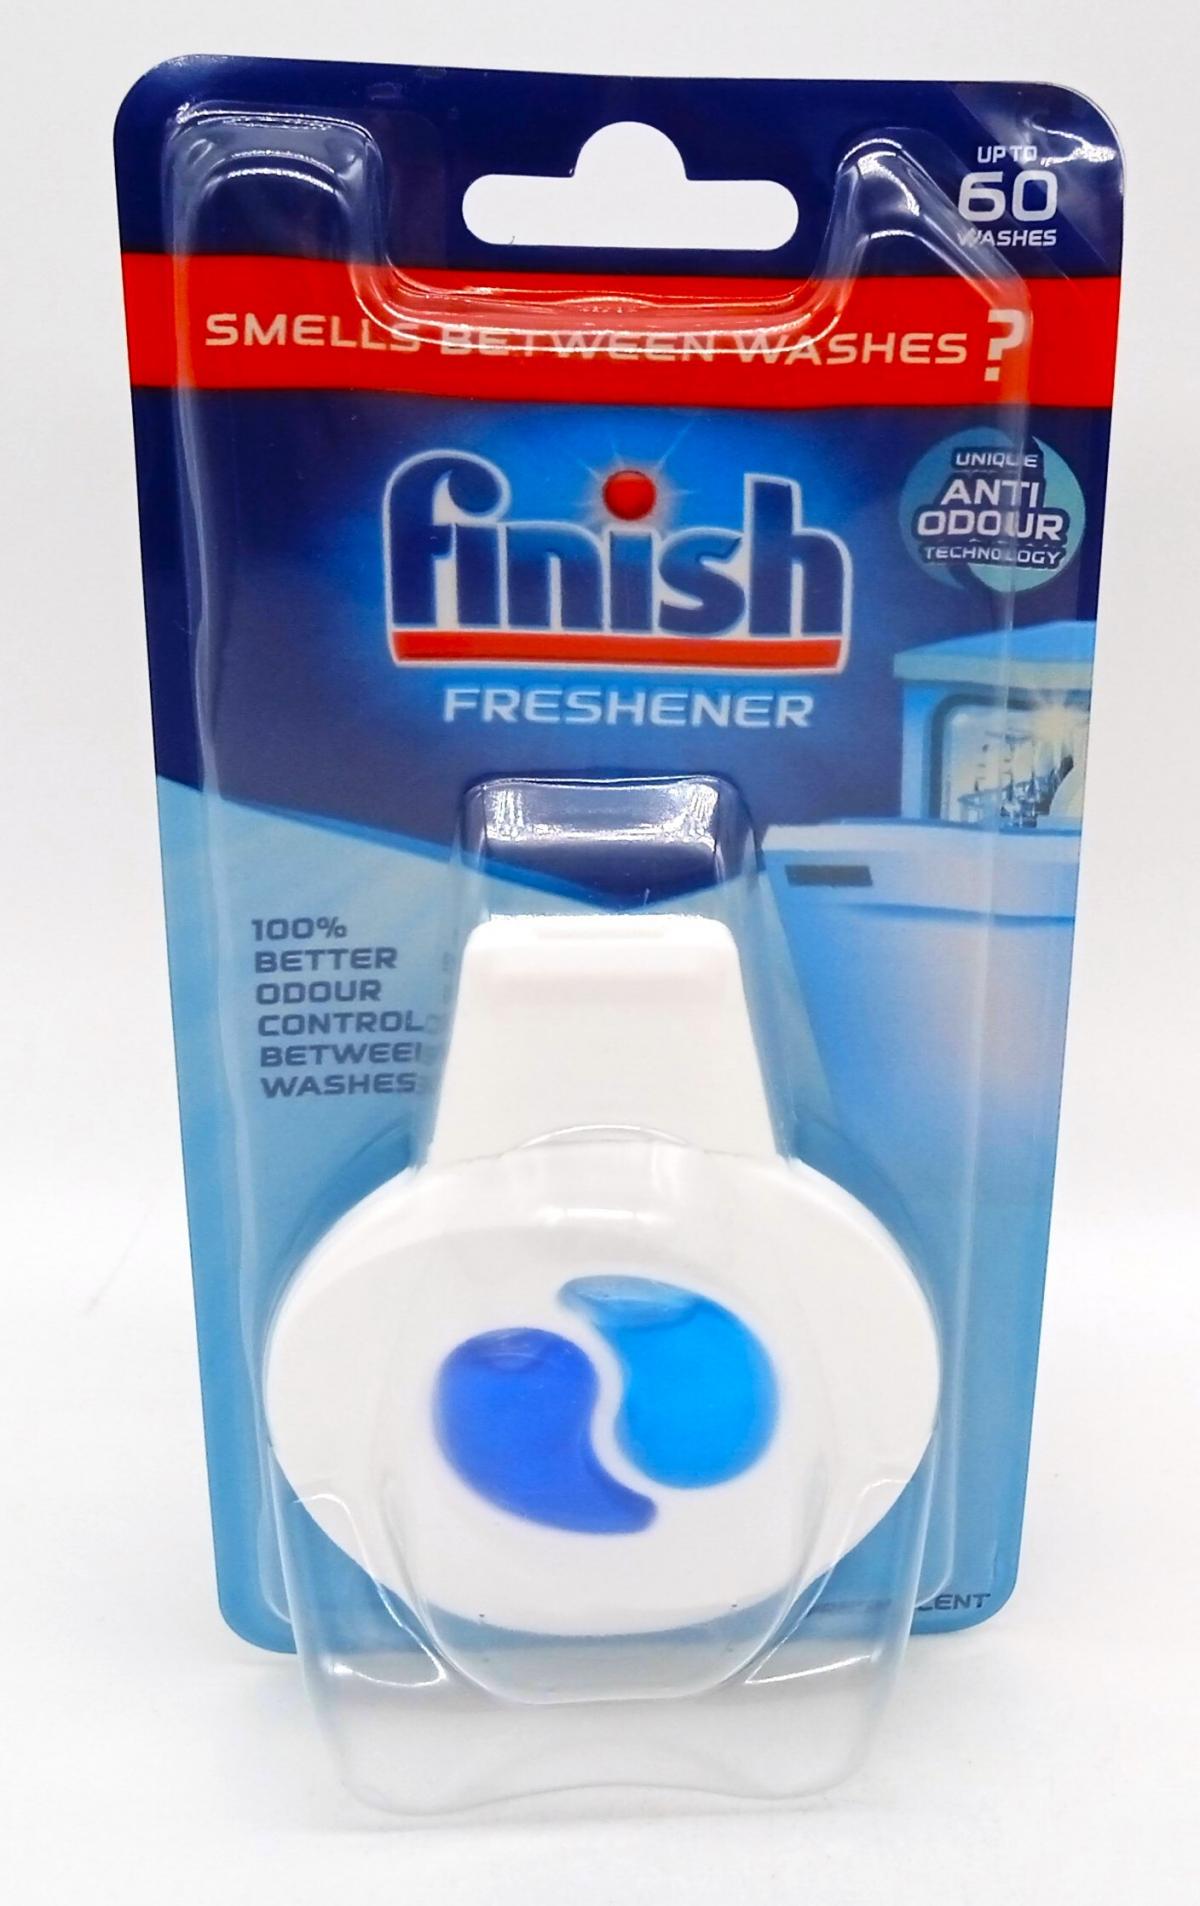 Finish Dishwasher Freshener 60w Fresh Scent 4ml 1UNIT